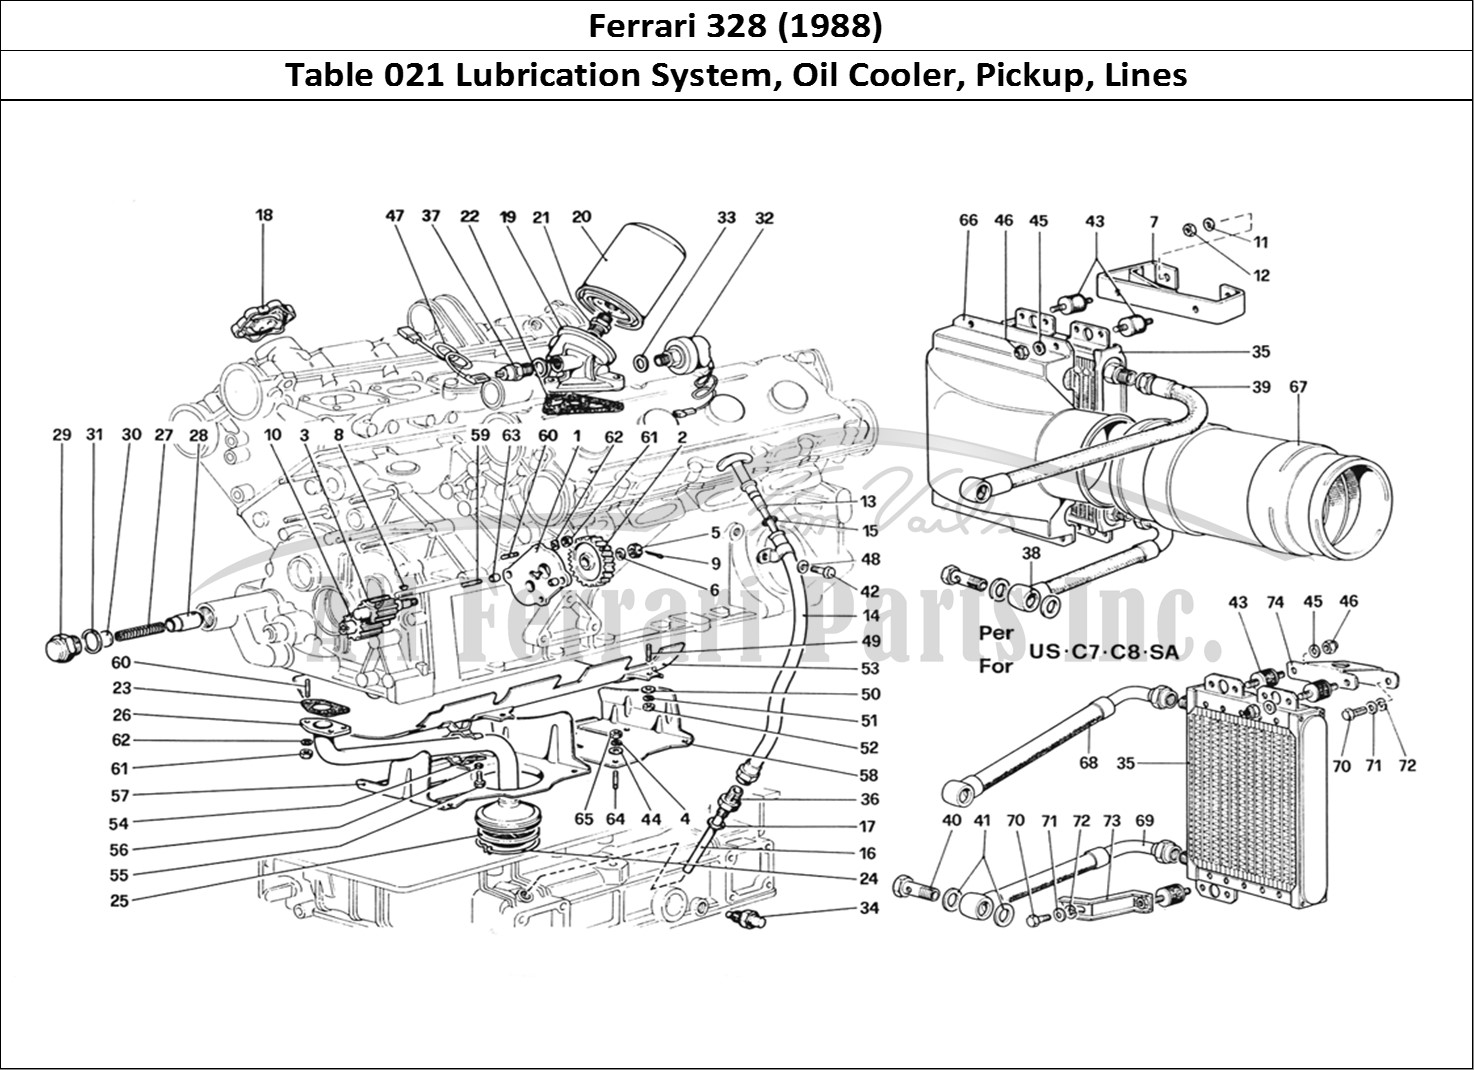 Ferrari Parts Ferrari 328 (1988) Page 021 Lubrication System